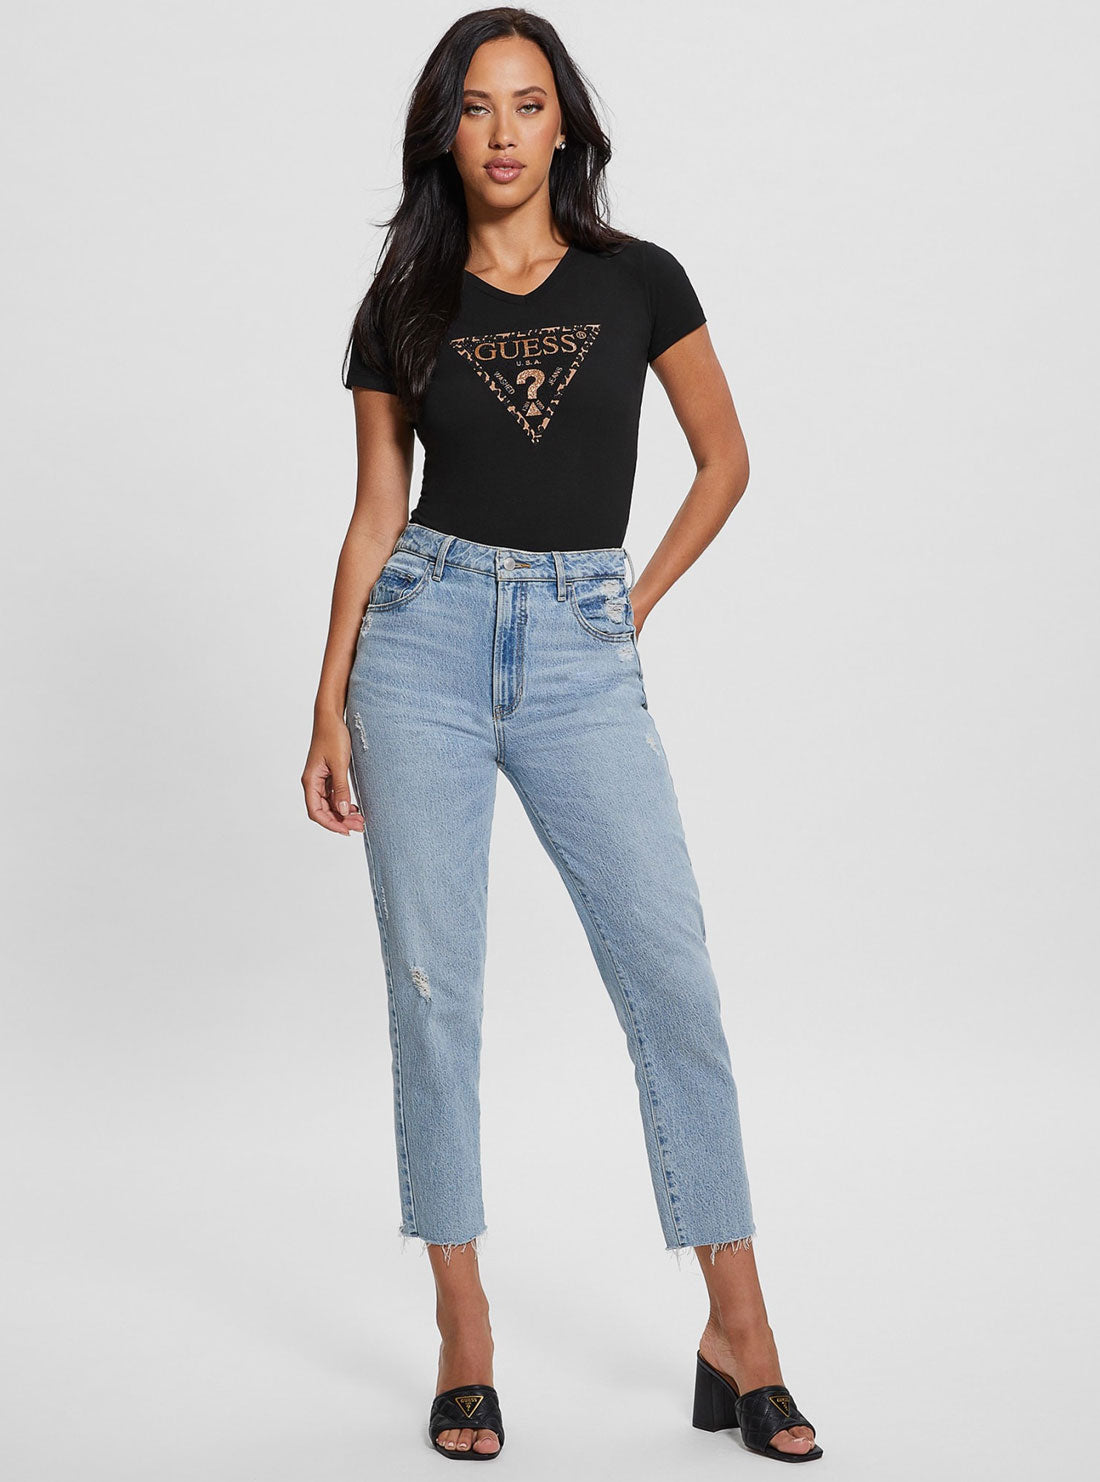 Black Leo Triangle Logo T-Shirt | GUESS Women's Apparel | full view